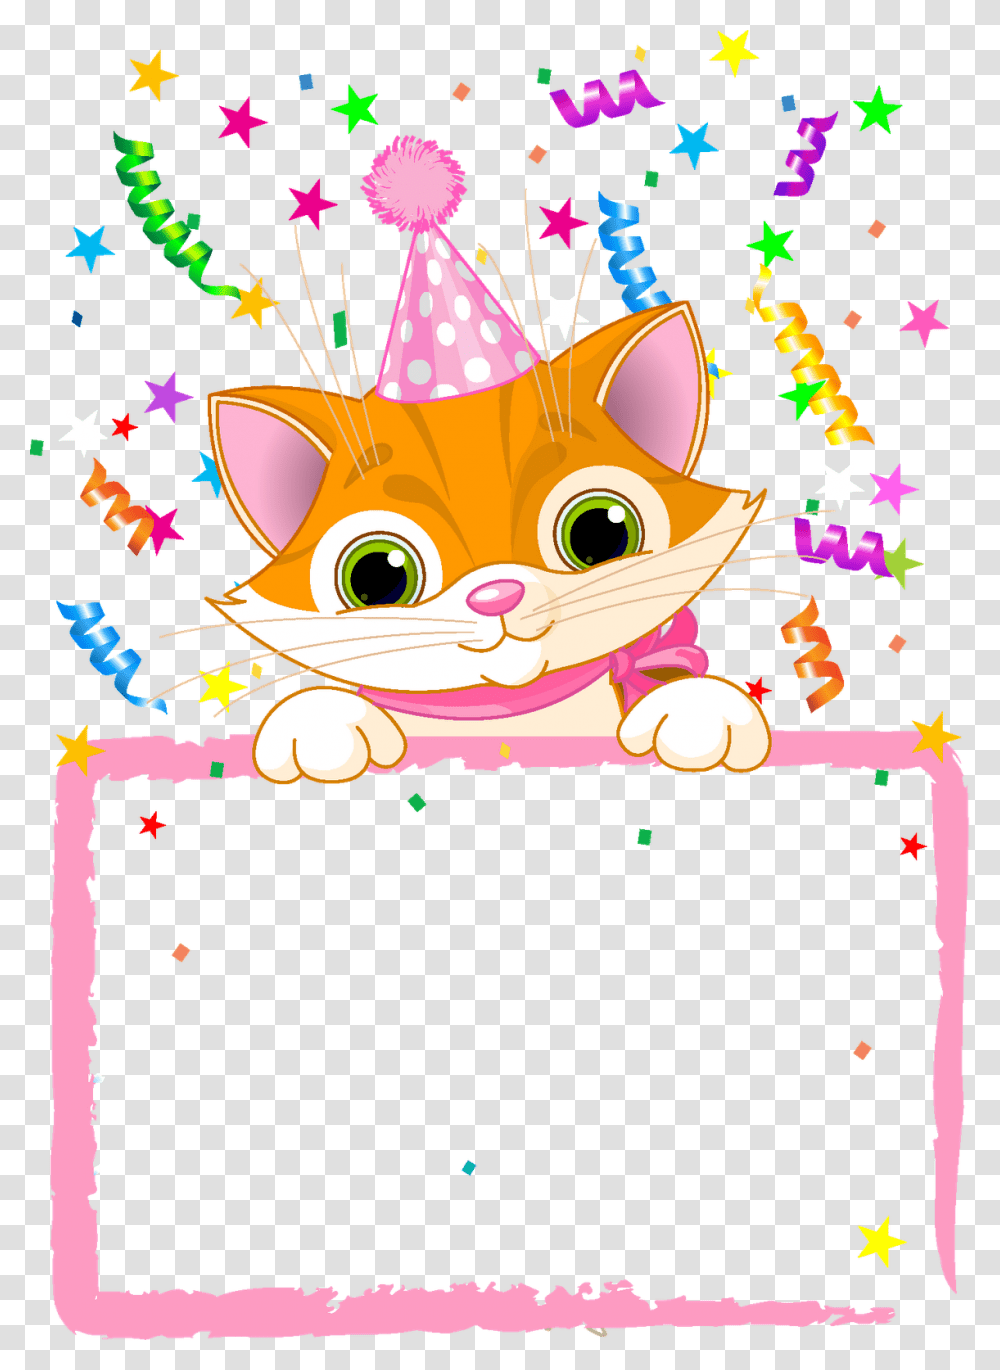 Happy Birthday Art Birthday Birthday Wishes Happy Birthday Cartoon Stickers, Apparel, Party Hat, Poster Transparent Png